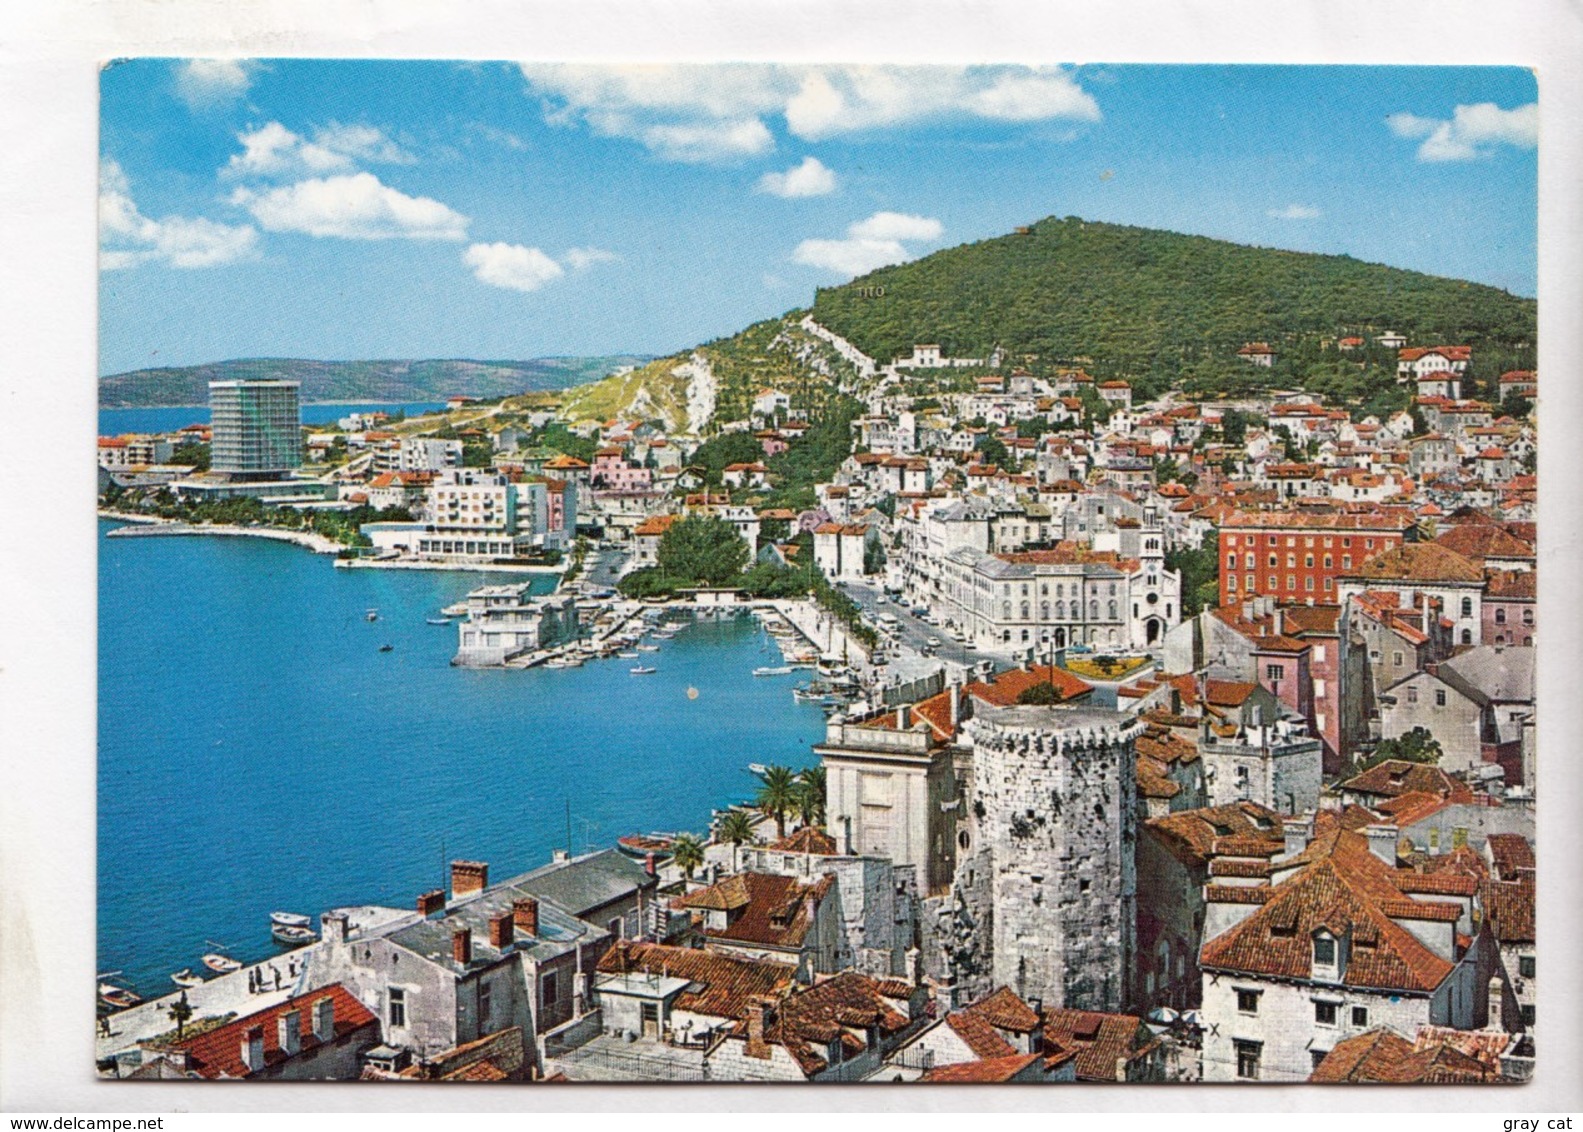 SPLIT, Croatia, Postcard [23767] - Croatia